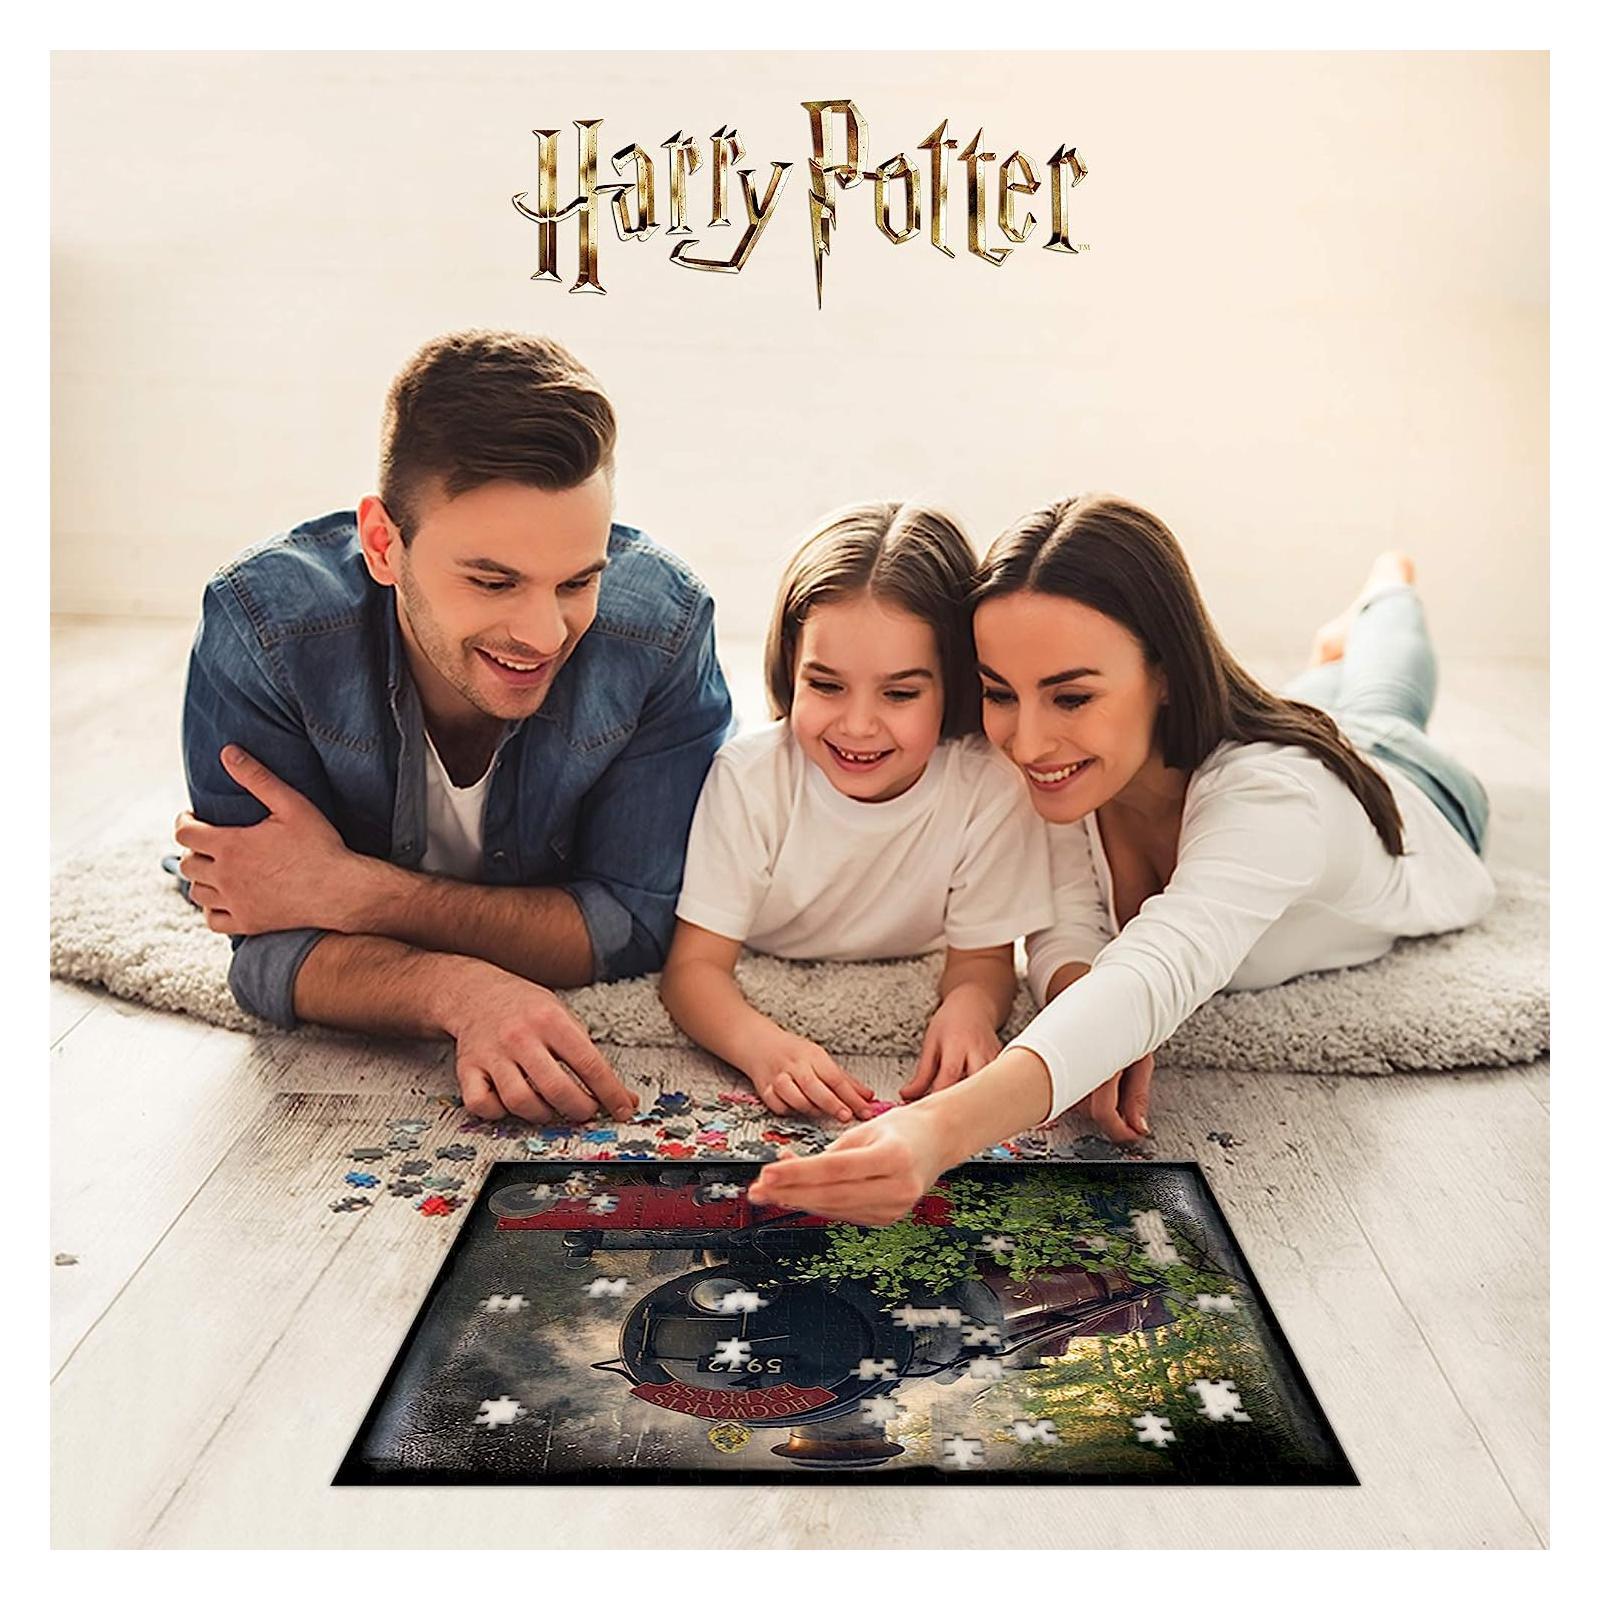 Harry Potter Hogwarts Express High Quality 3D Lenticular 500 Pcs Jigsaw Puzzle